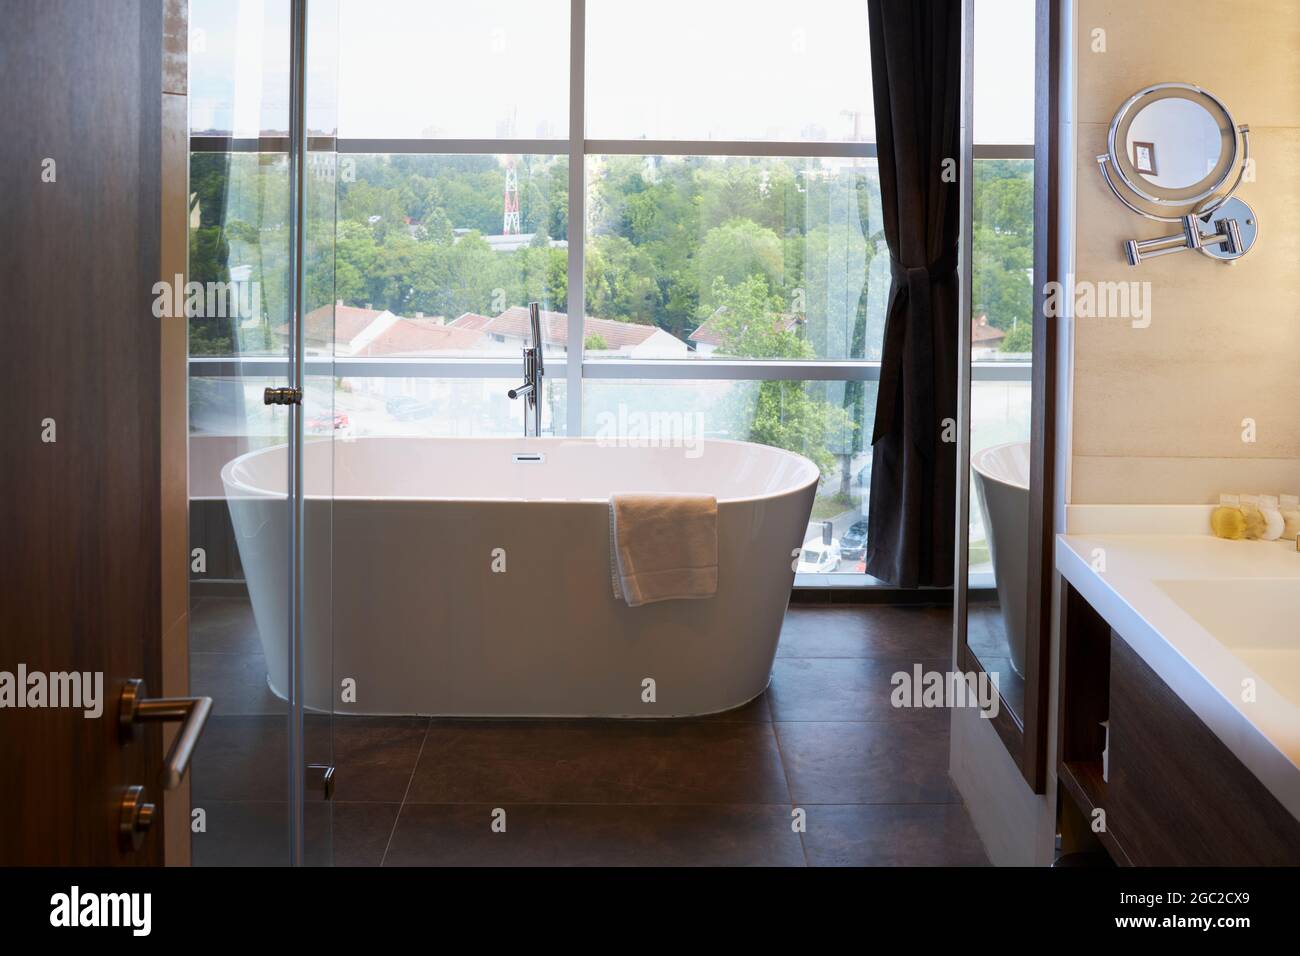 Expensive bathtub in a bathroom Stock Photo